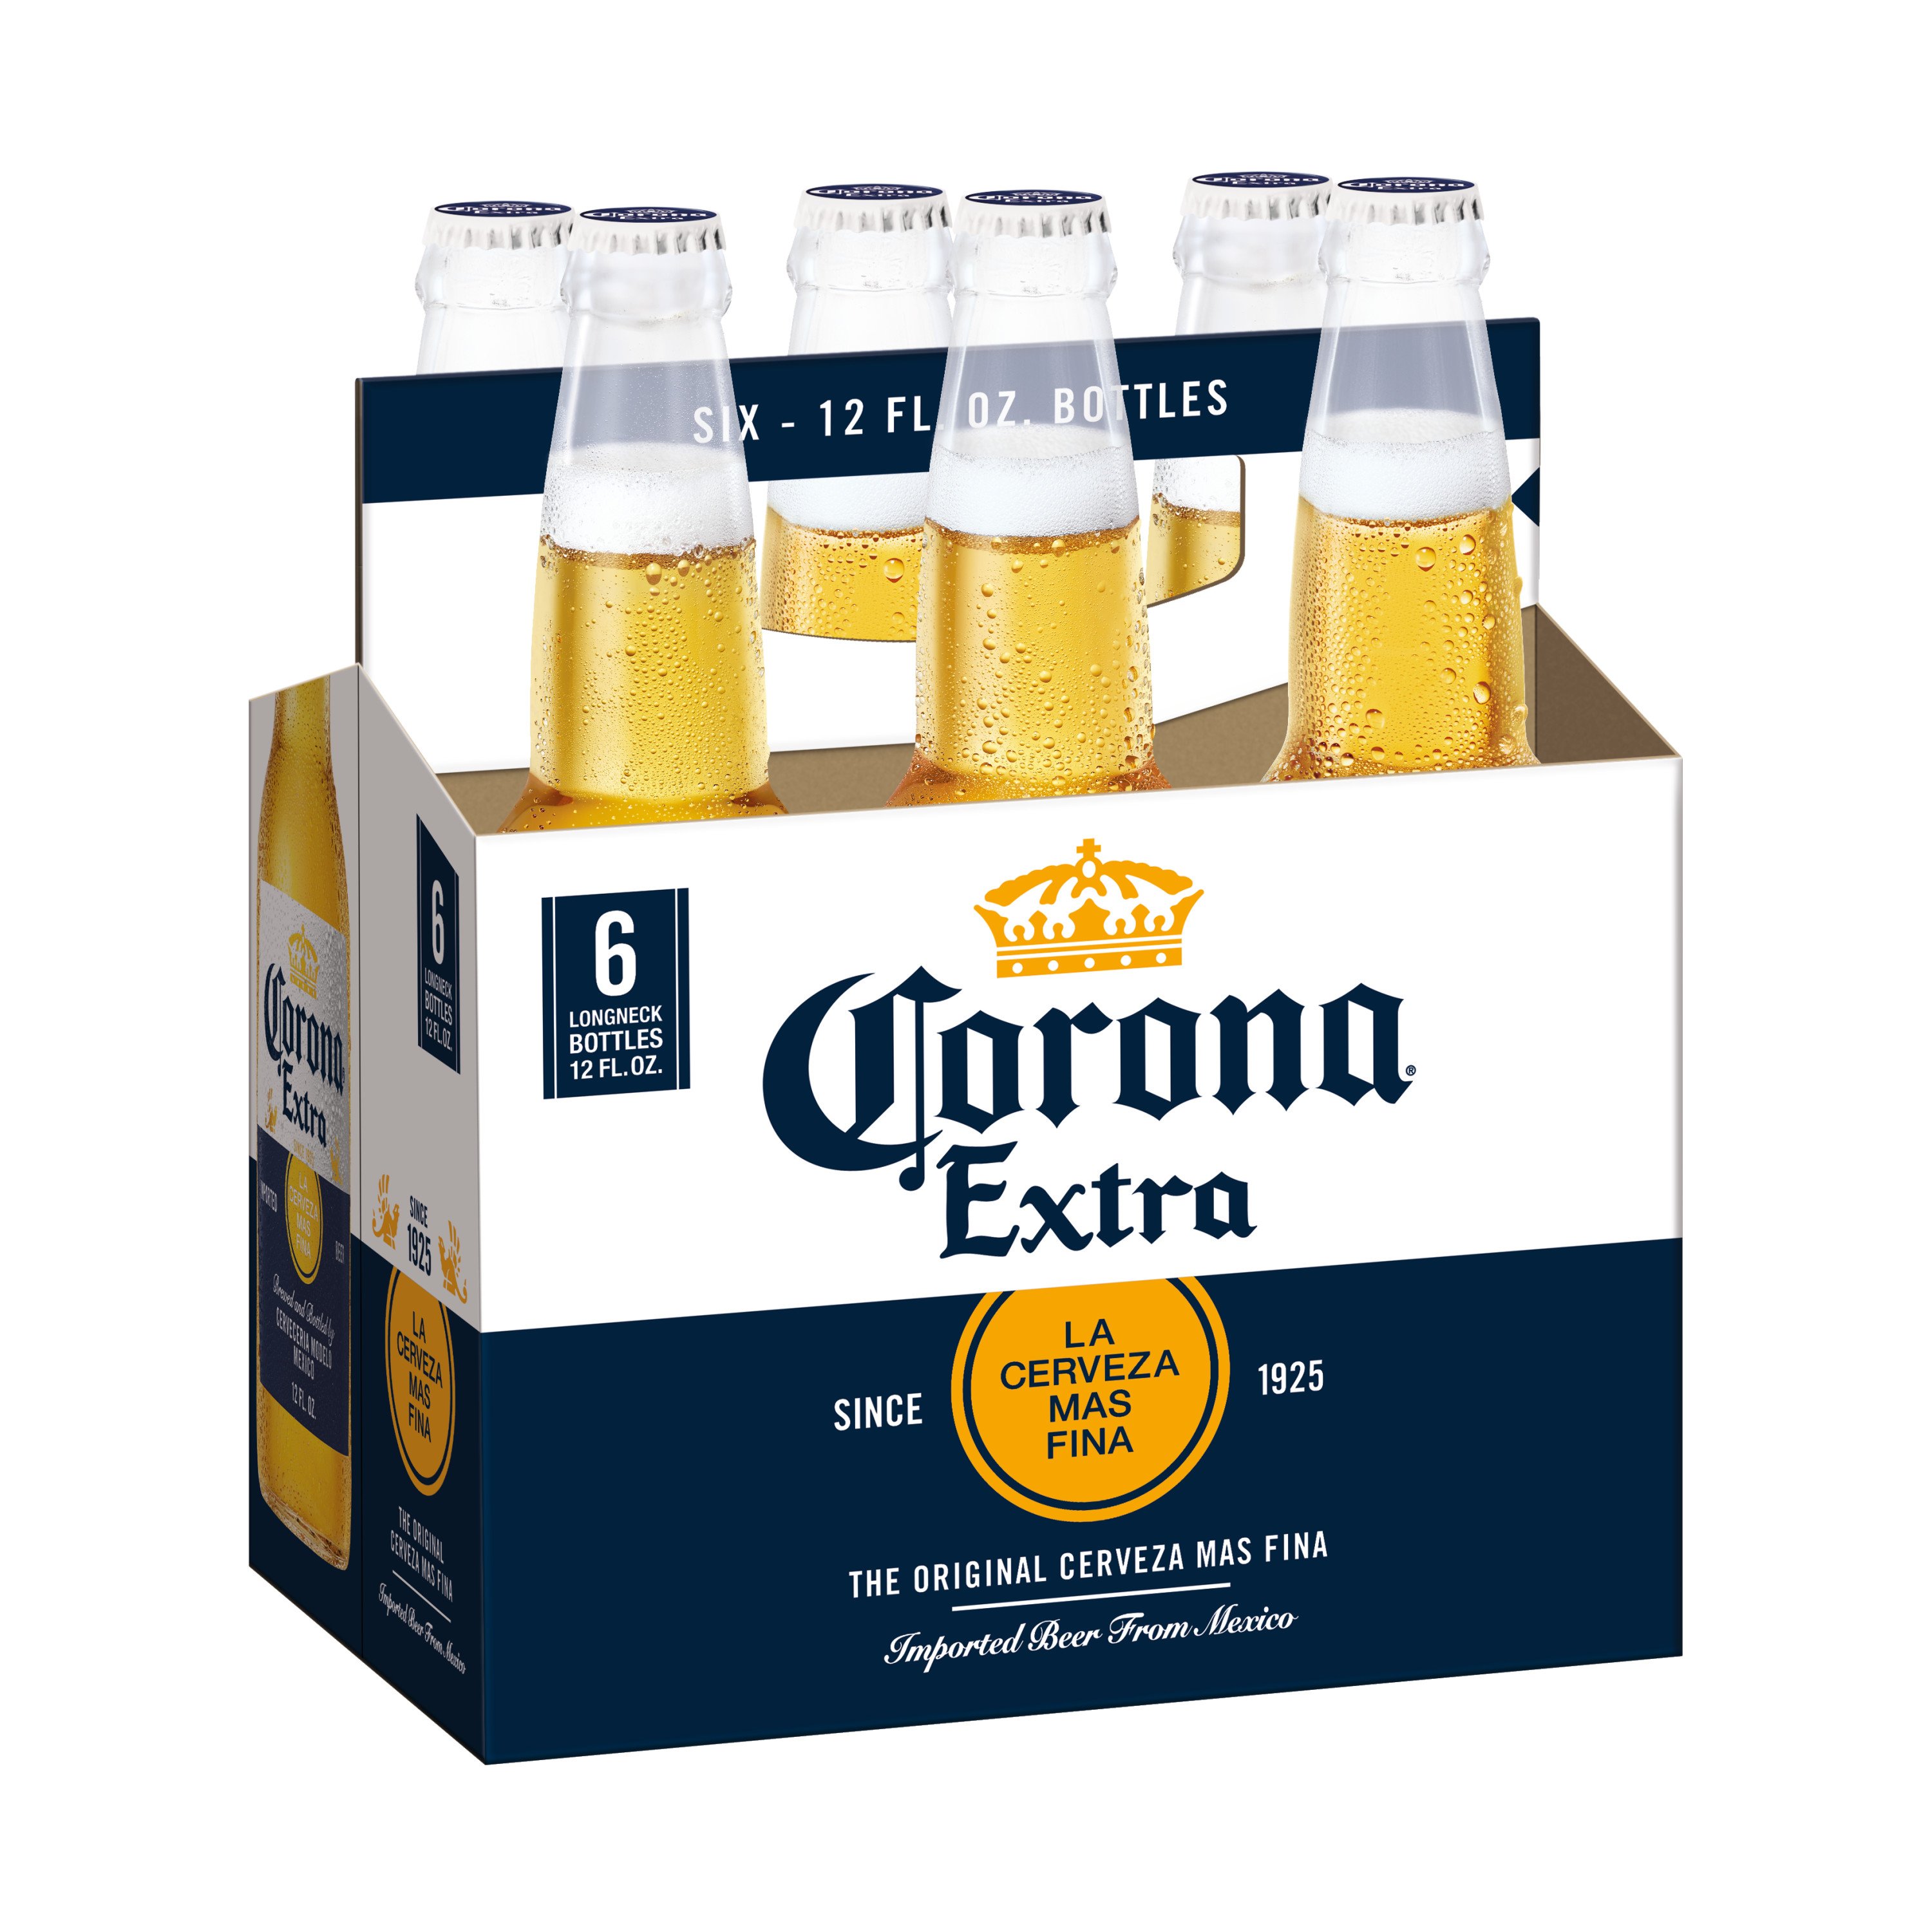 Six pack of coronas